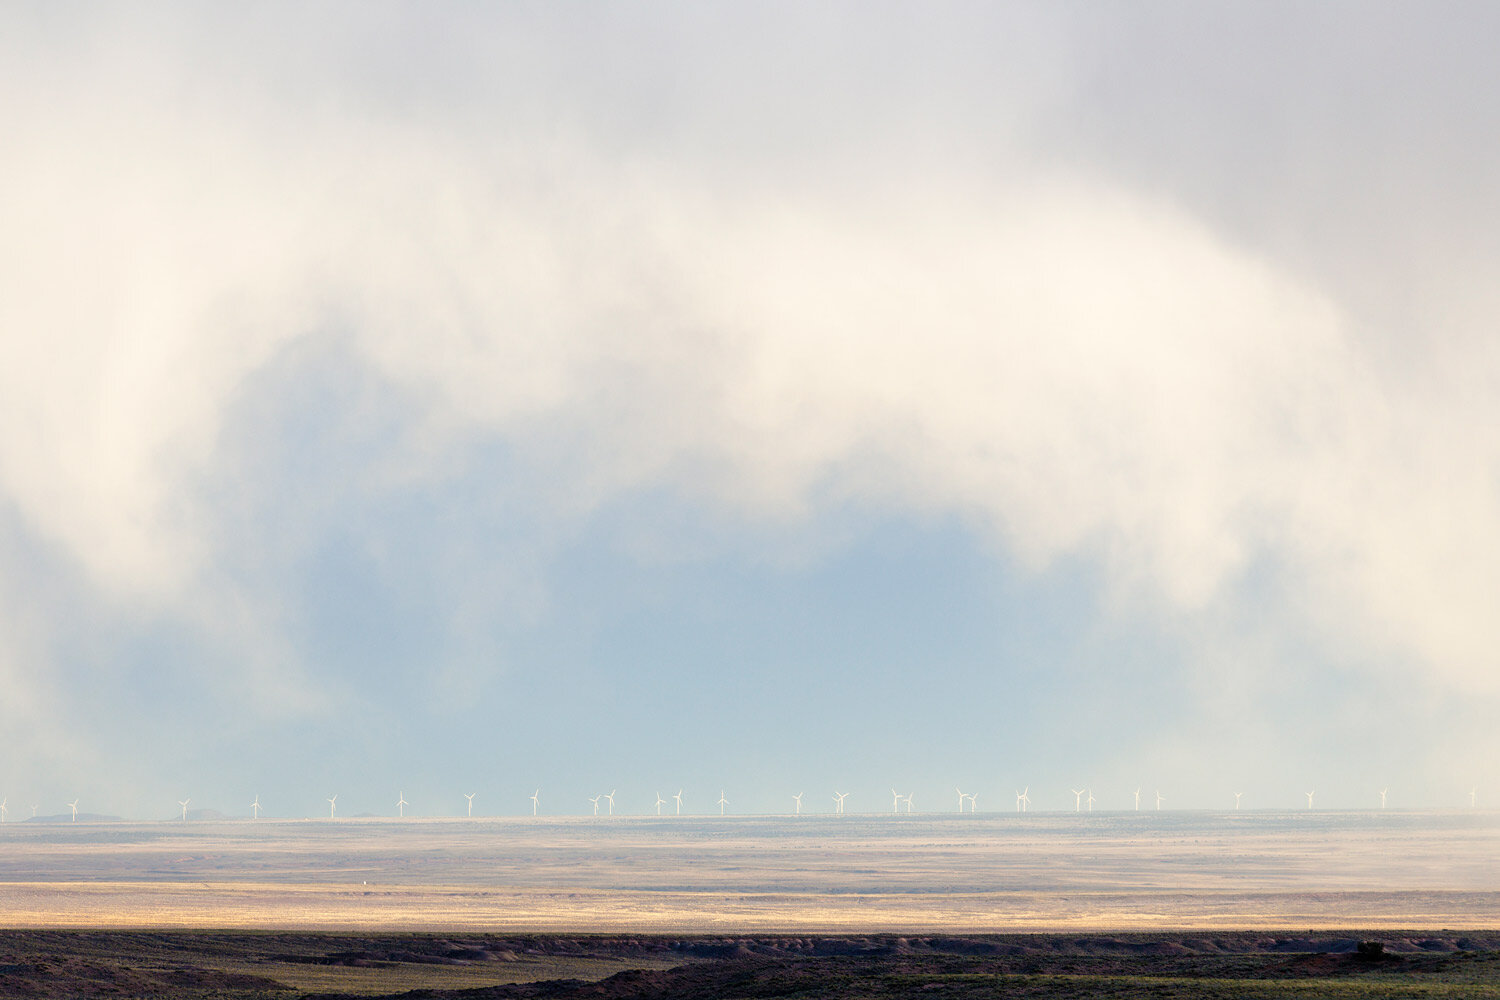 Windmills, Painted Desert. Winslow, AZ. 2015 (35°9'39.15" N 110°27'49.59" W)